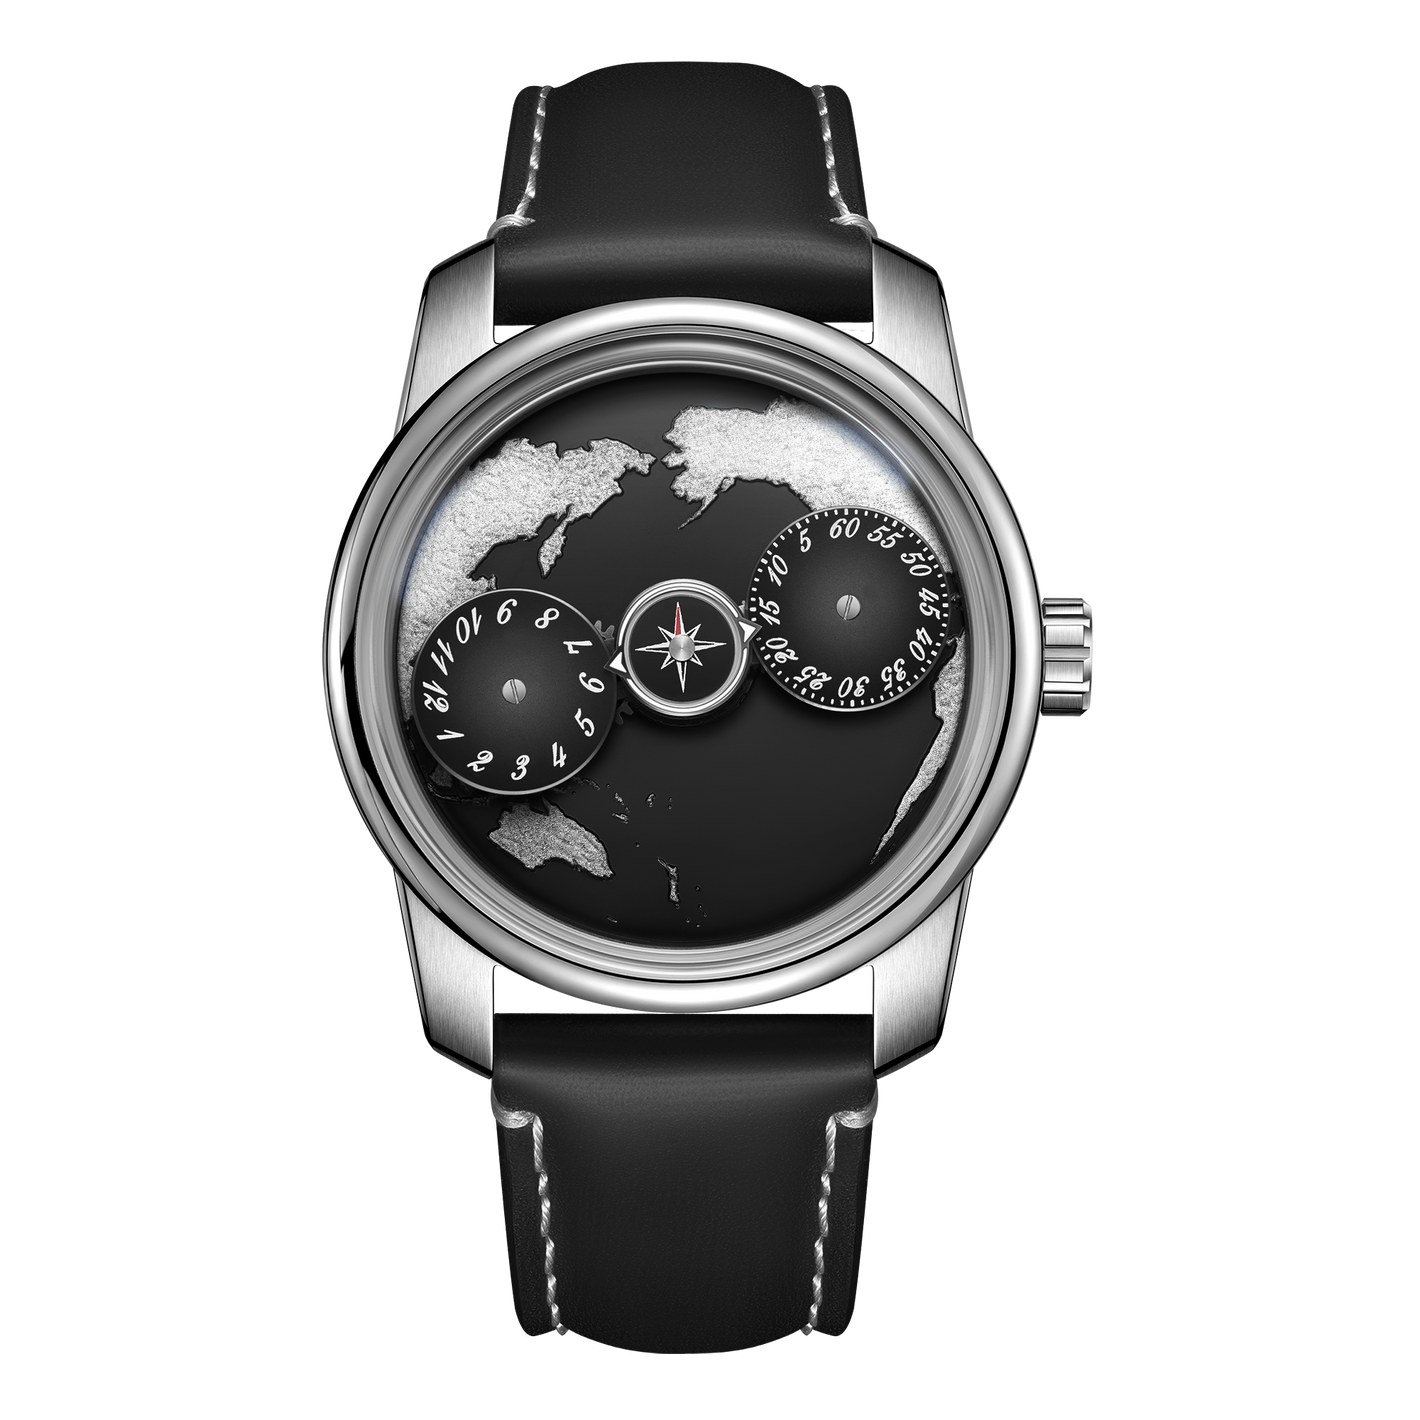 OBLVLO JM EARTH Series Men's Watches - Unique Dress Automatic Watches